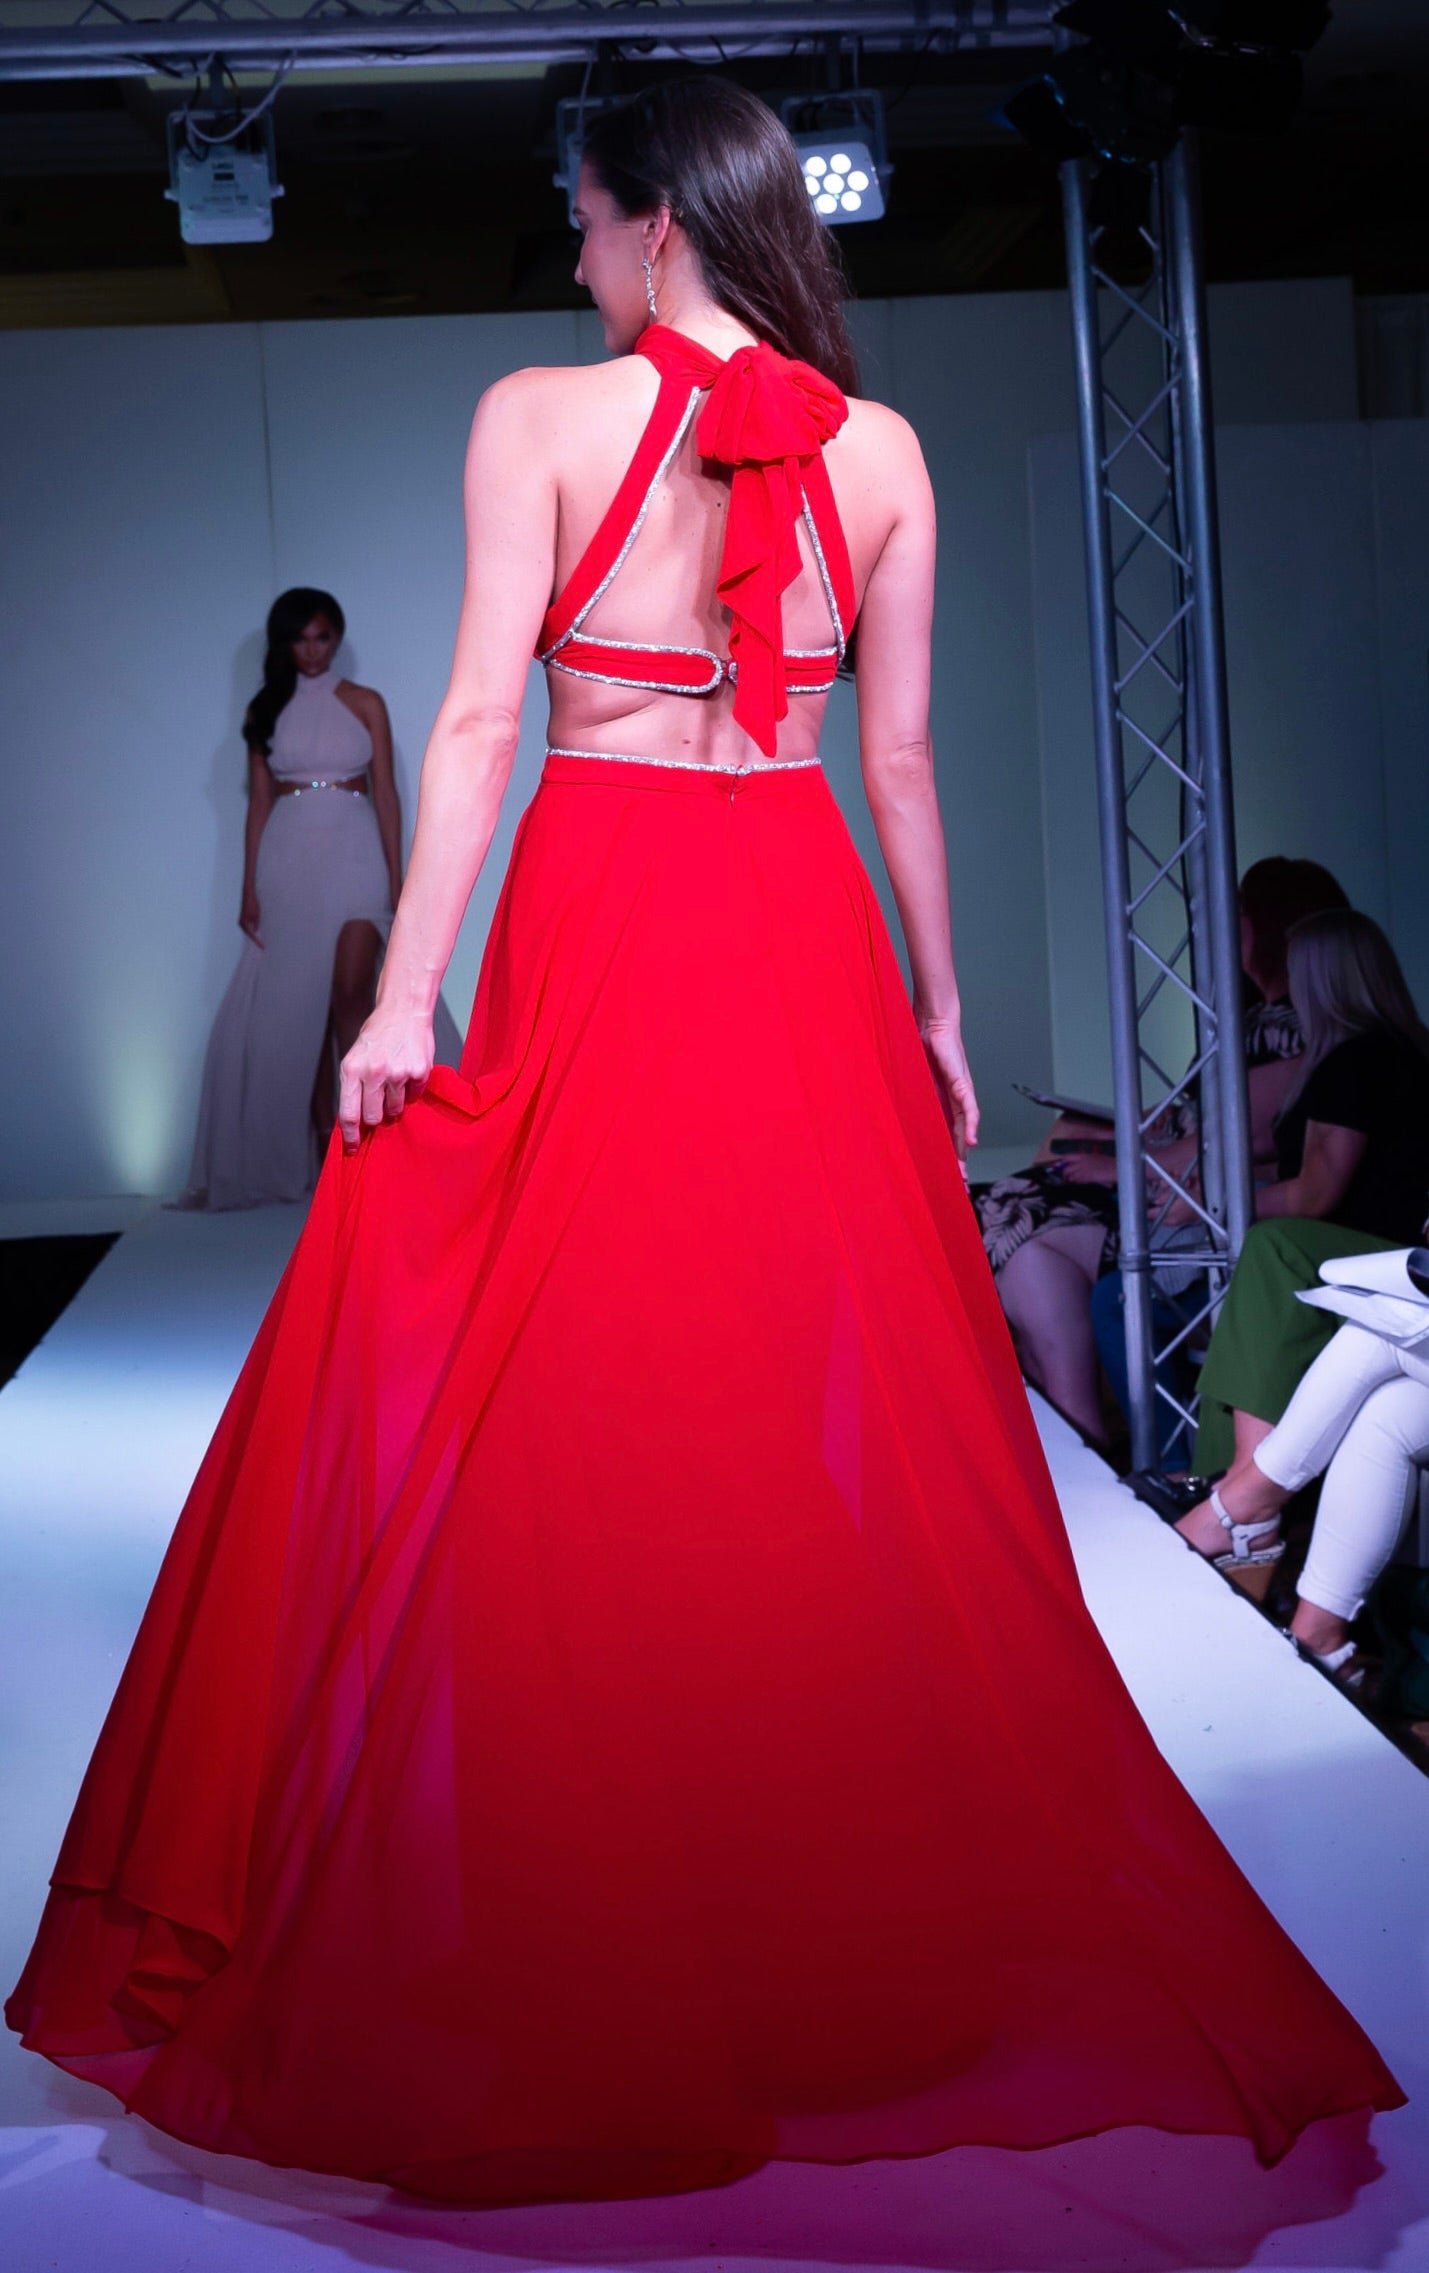 Red Evening & Prom Dress